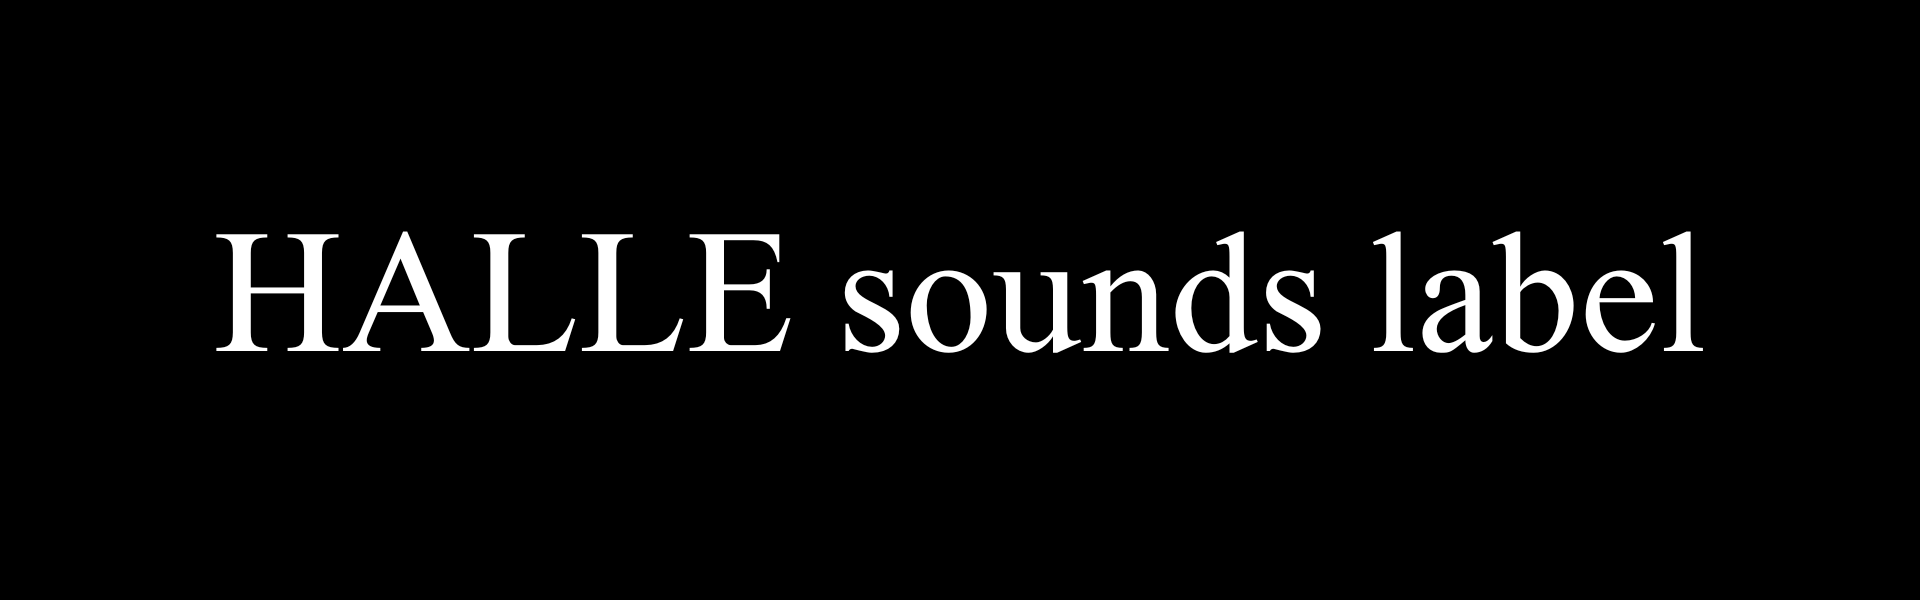 HALLE sounds label